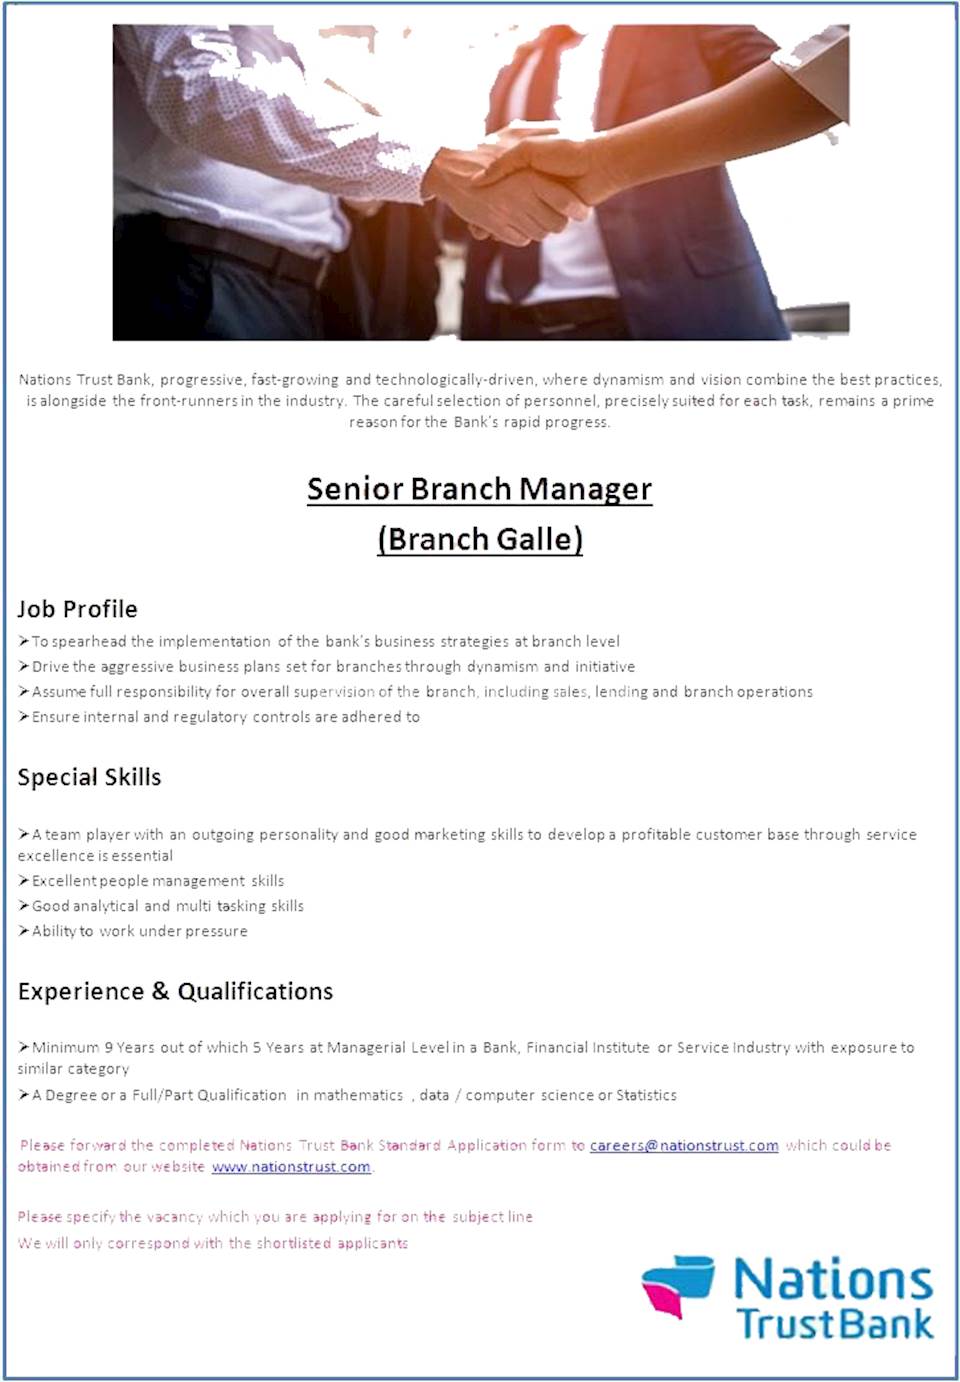 Senior Branch Manager - Galle